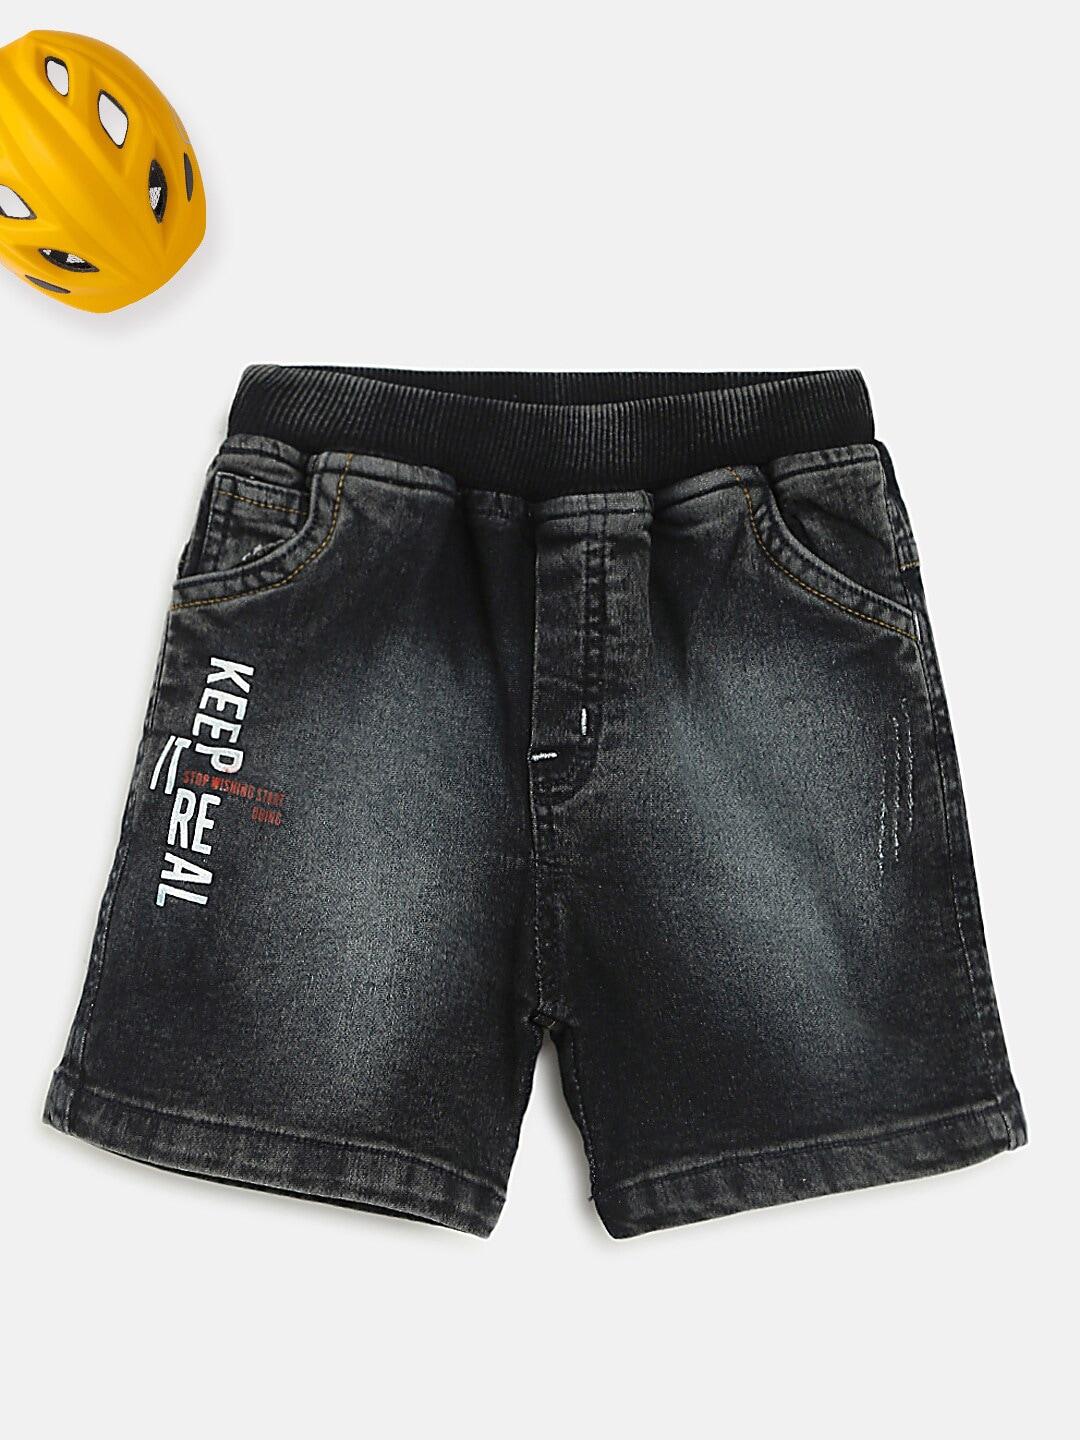 homegrown boys cotton black washed outdoor denim shorts